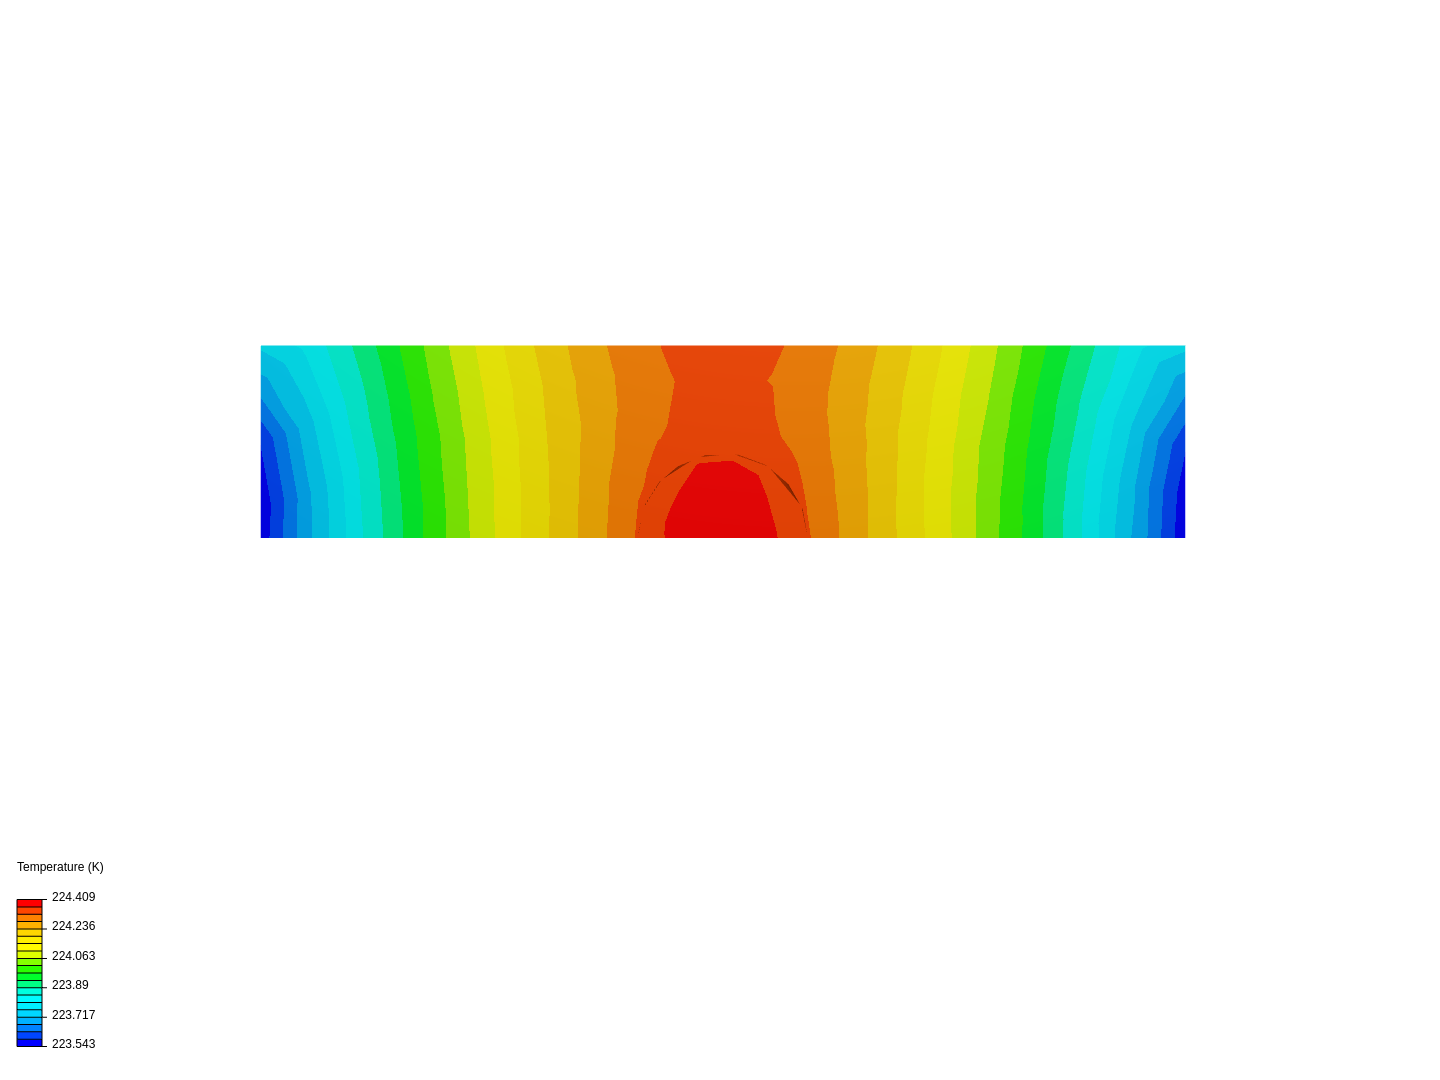 Cooling block - CHT simulation image